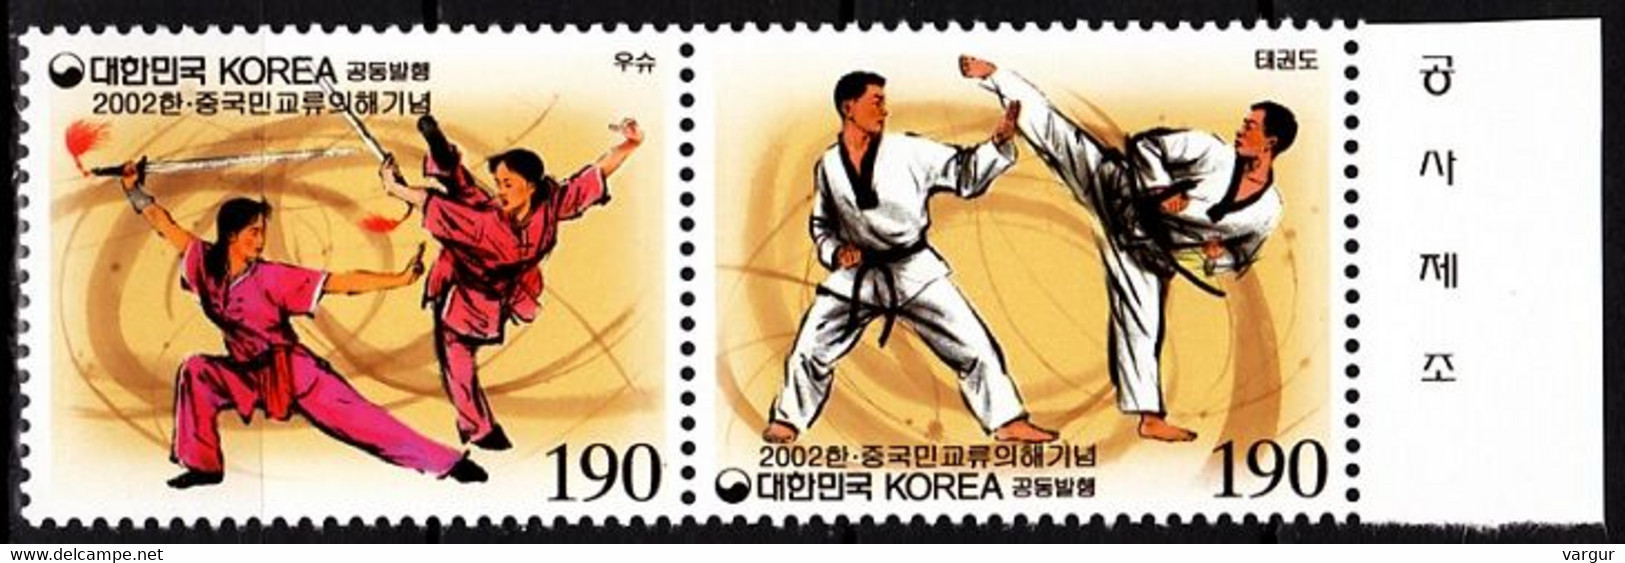 KOREA SOUTH 2002 Martial Sports: Teakwondo Kung-fu. Joint China. Pair, MNH - Emissions Communes